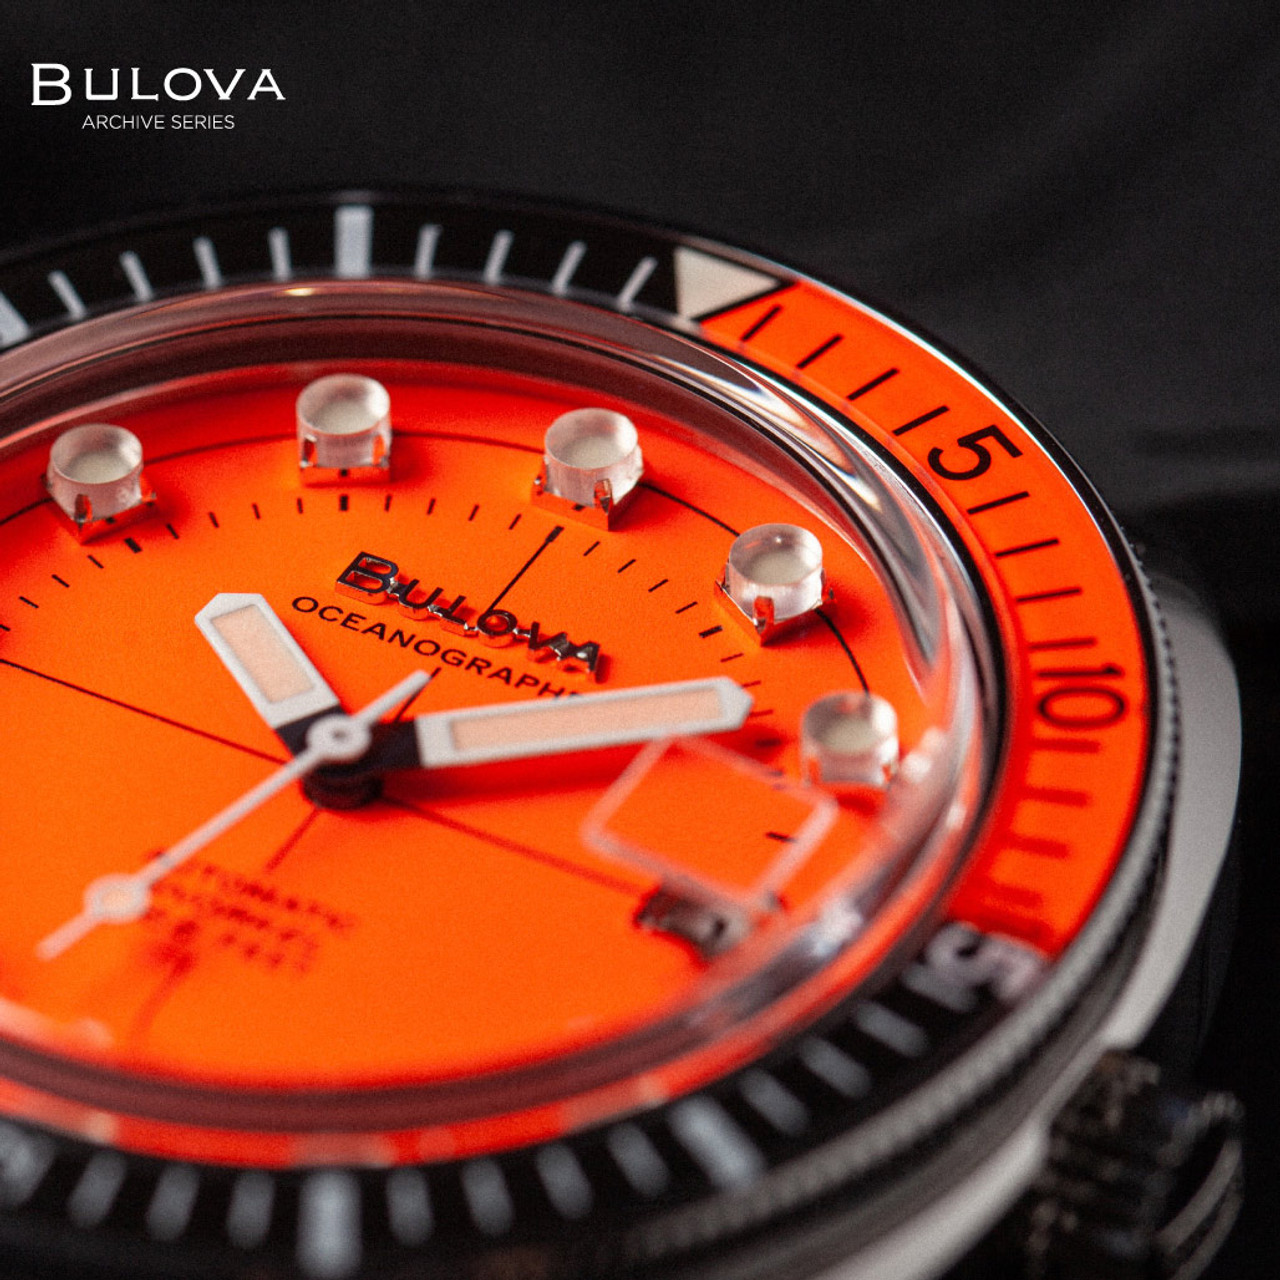 Snorkel Bulova Watch Oceanographer Dial with Orange Dive #96B350 Automatic